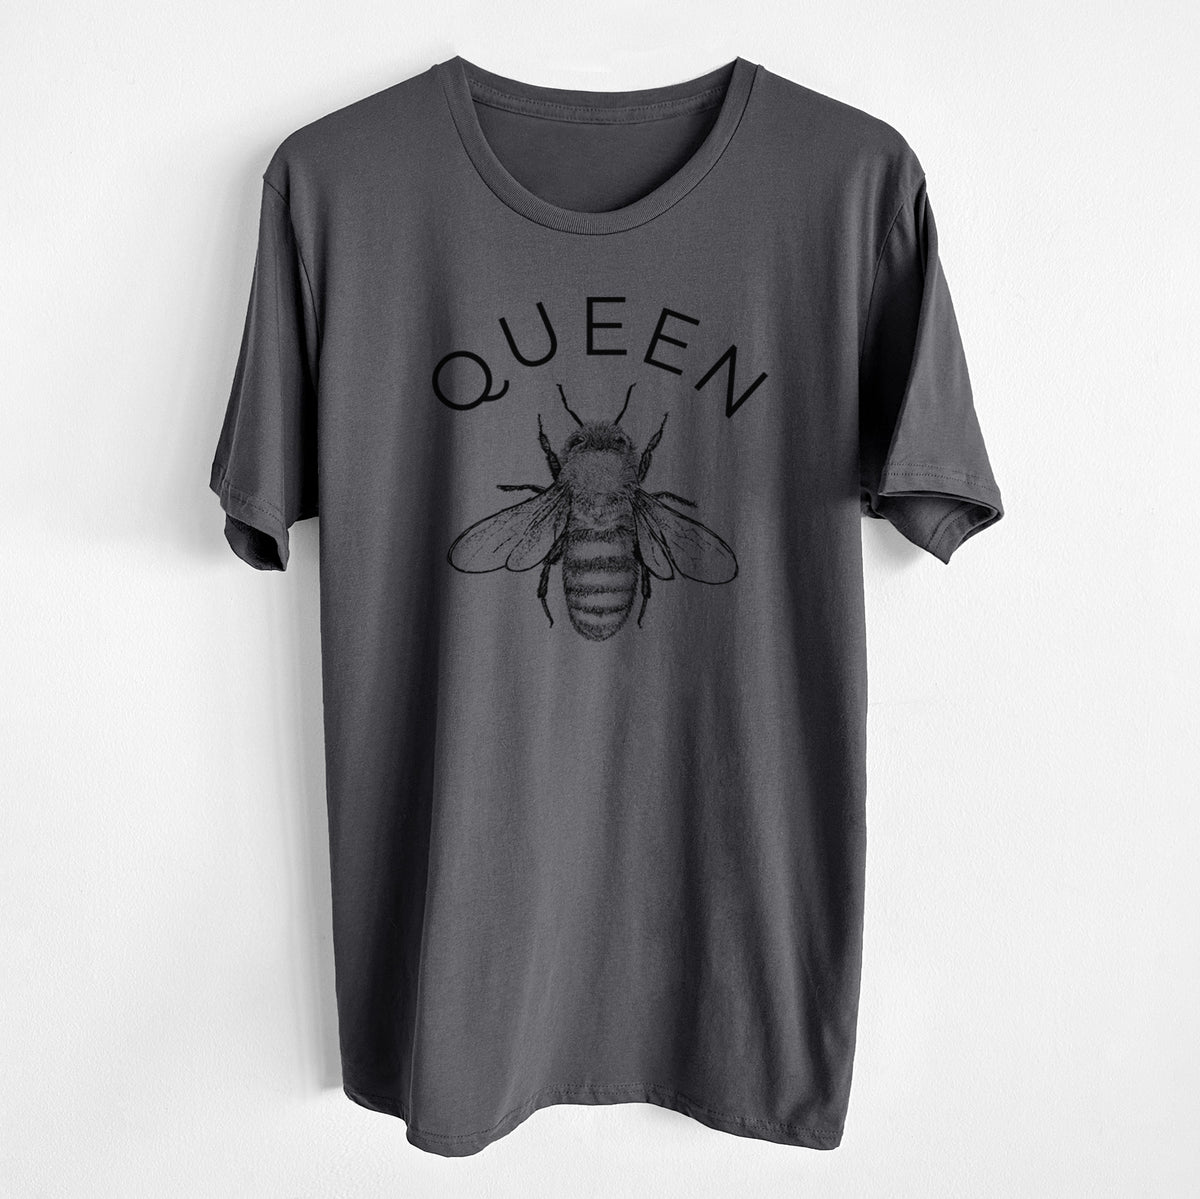 Queen Bee - Unisex Crewneck - Made in USA - 100% Organic Cotton